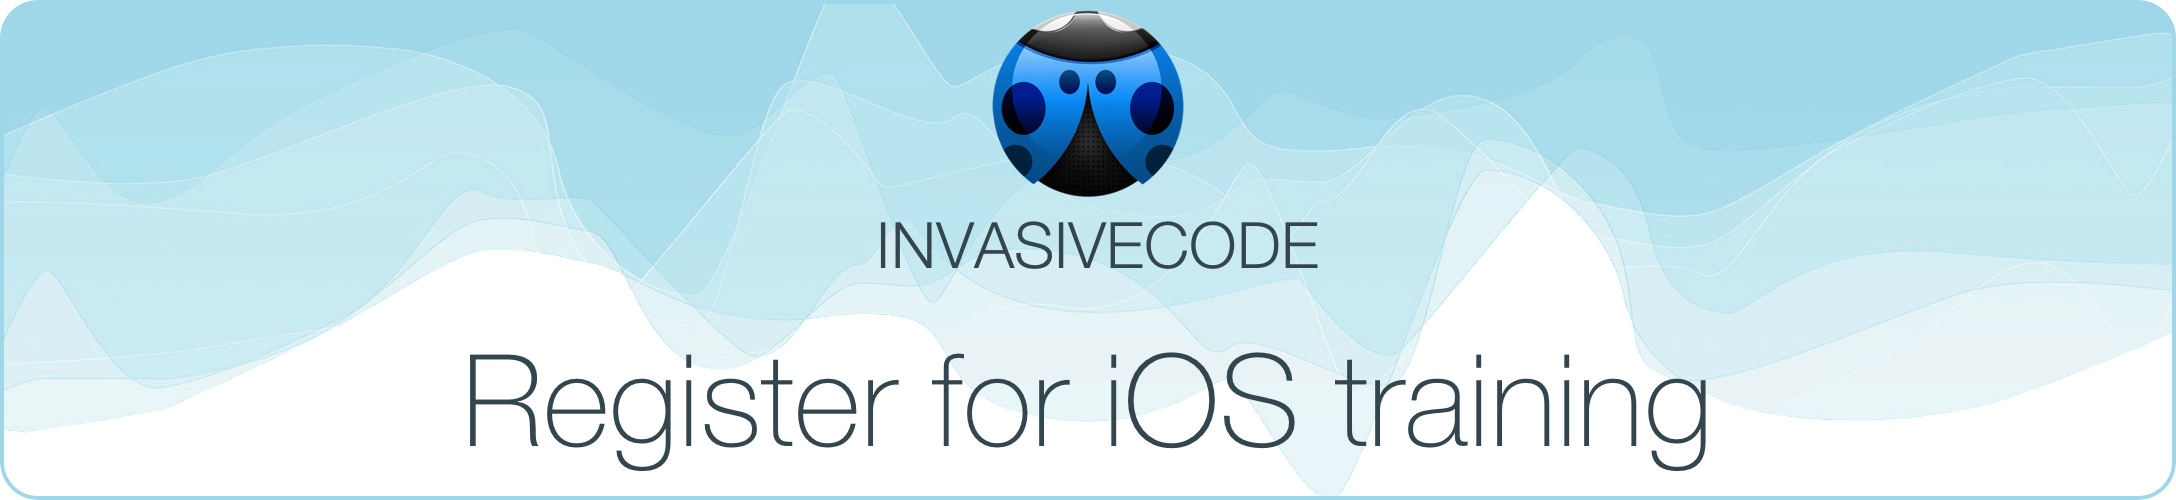 iOS Training | INVASIVECODE